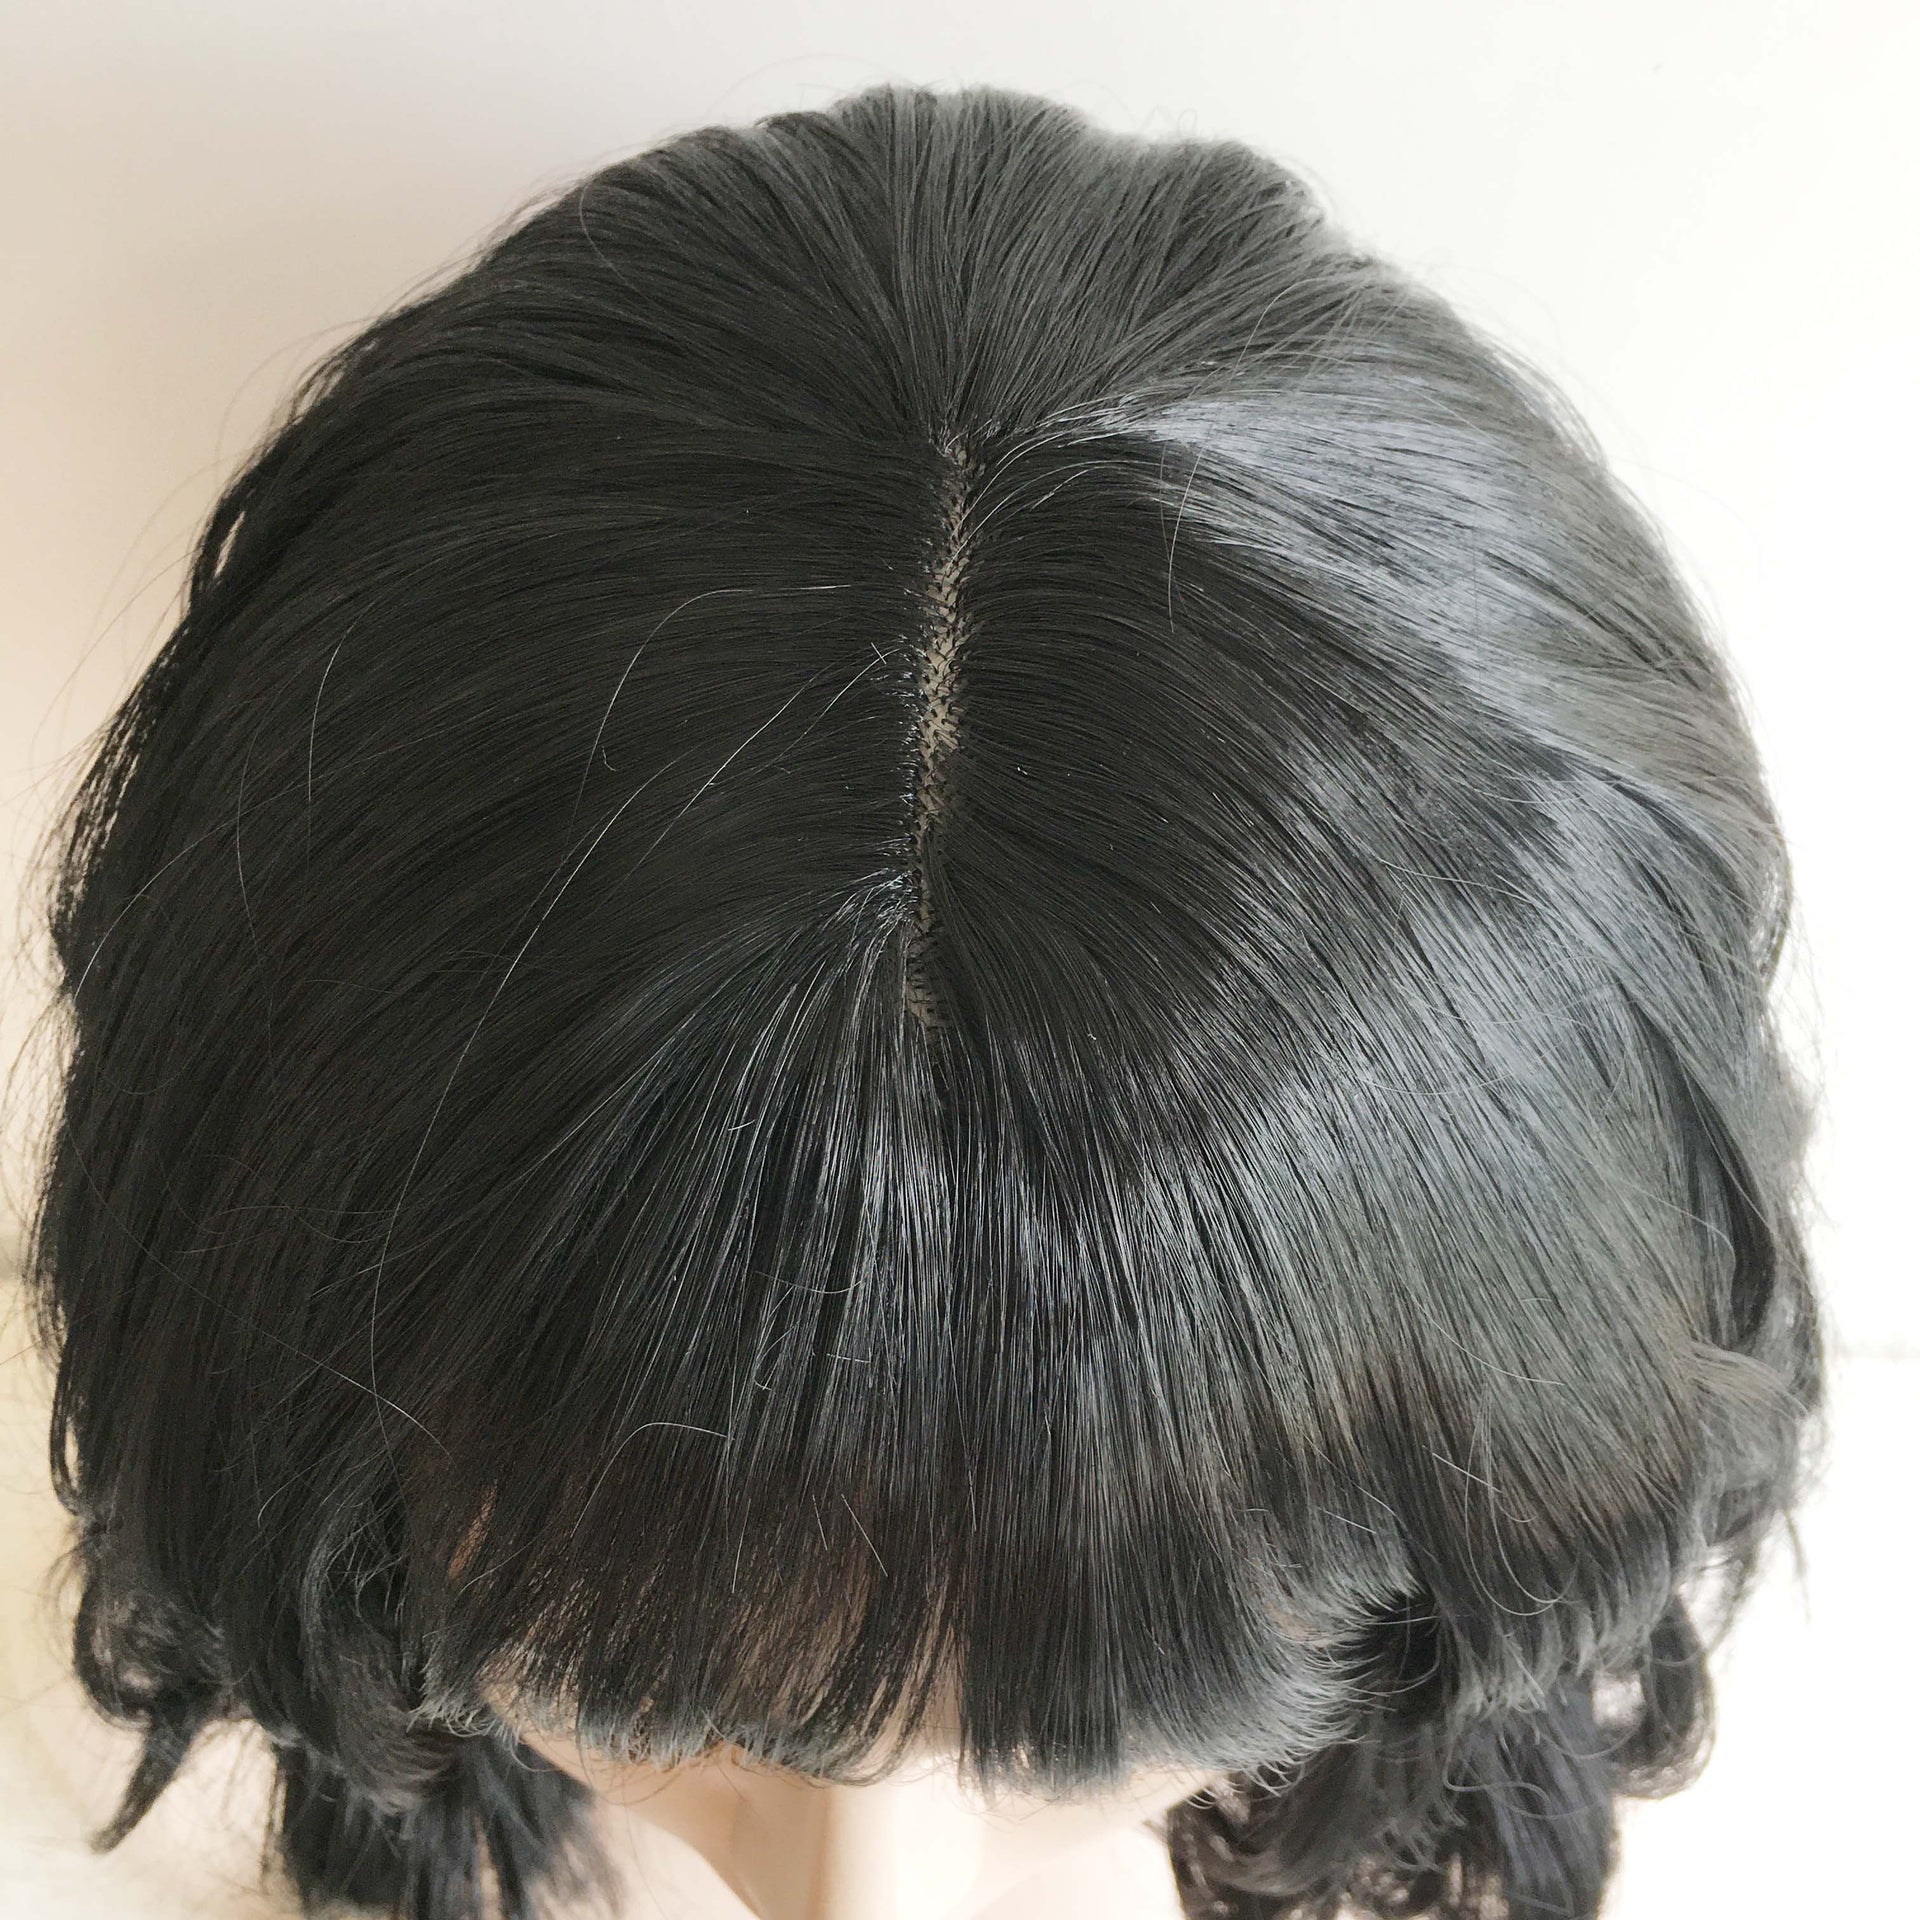 nevermindyrhead Women Black Short Curly Cute Bob Fringe Bangs Wig